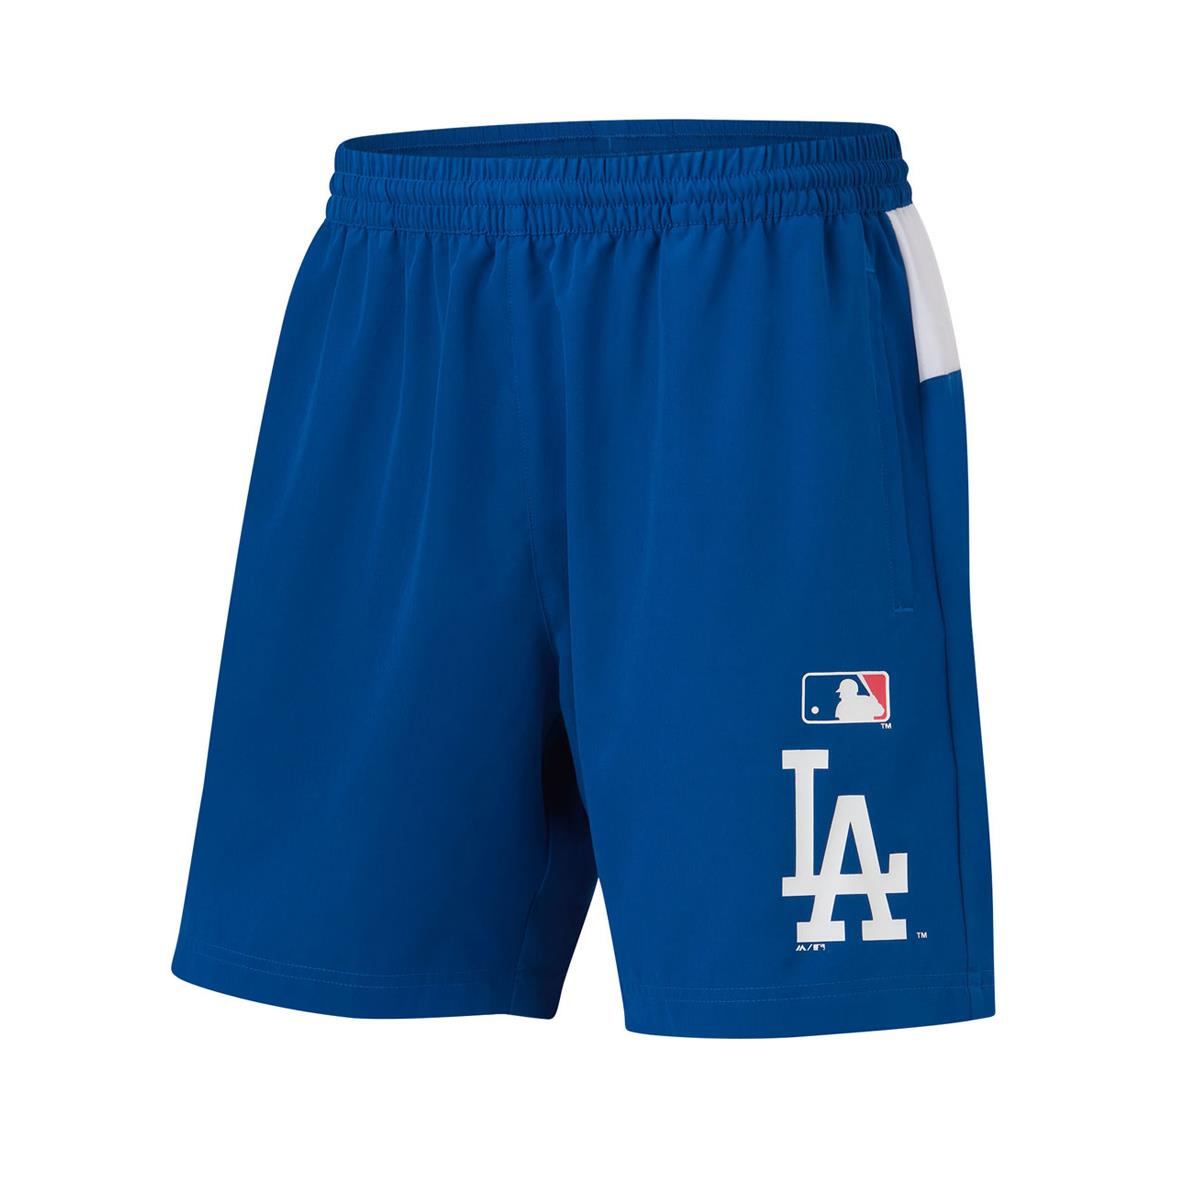 Los Angeles Dodgers Mens Training Shorts Blue XL